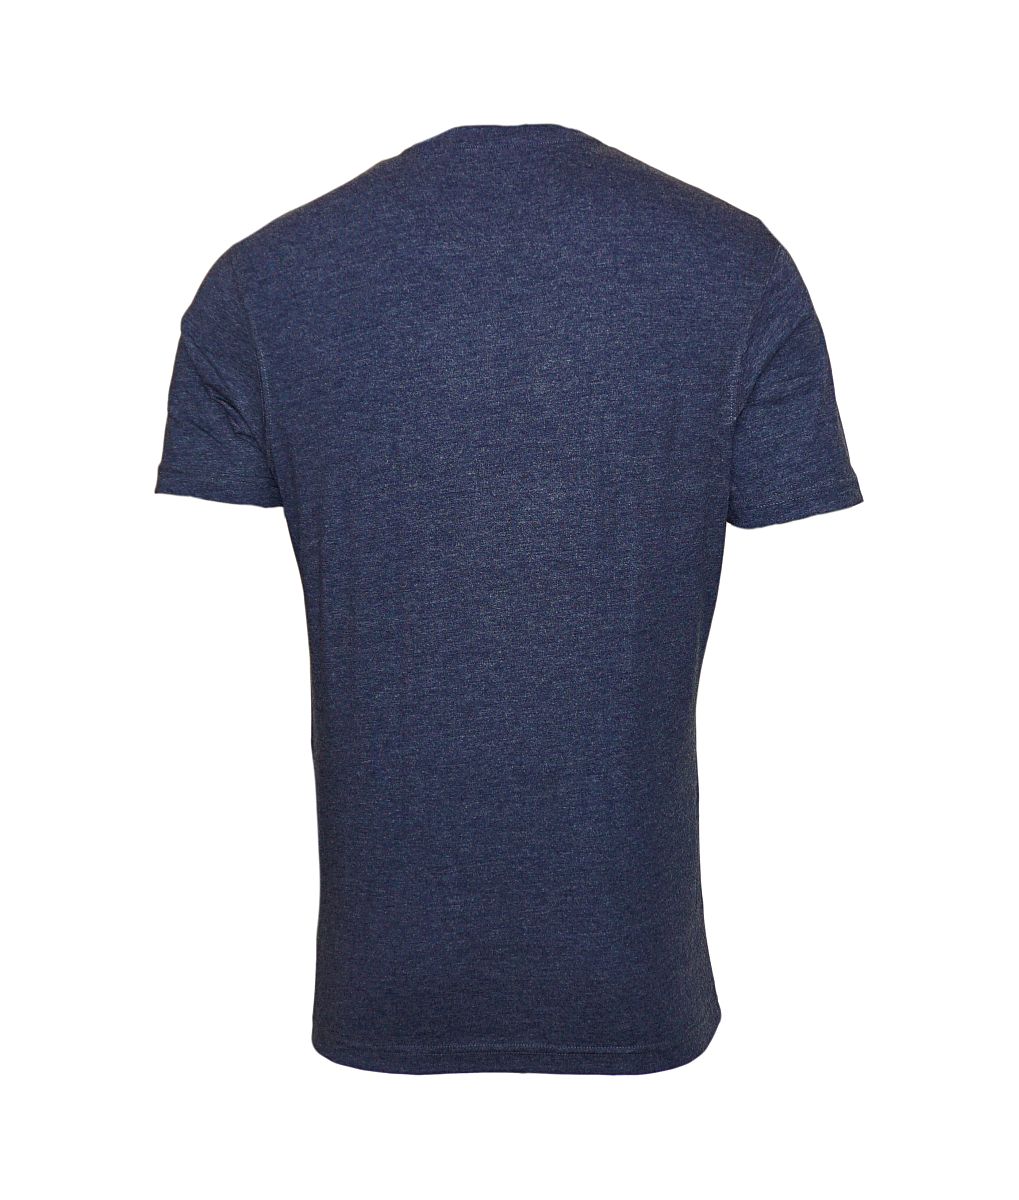 Daniel Hechter 2er Pack T-Shirts V-Ausschnitt 76002 172972 680 blau melange SH17-DH2P